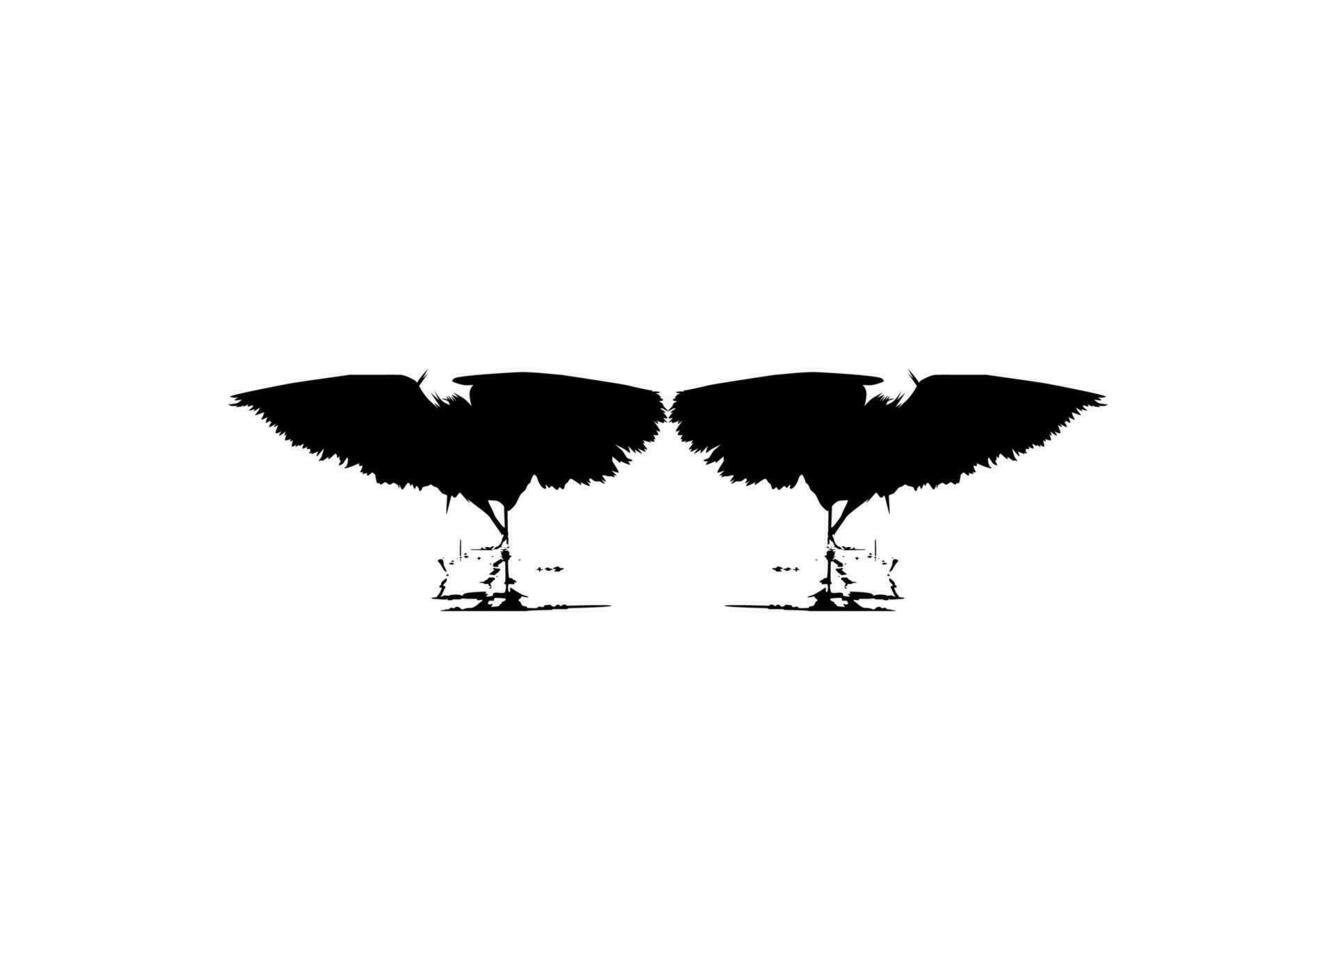 Pair of The Black Heron Bird, Egretta Ardesiaca, also known as the Black Egret Silhouette for Art Illustration, Logo, Pictogram, Website, or Graphic Design Element. Vector Illustration